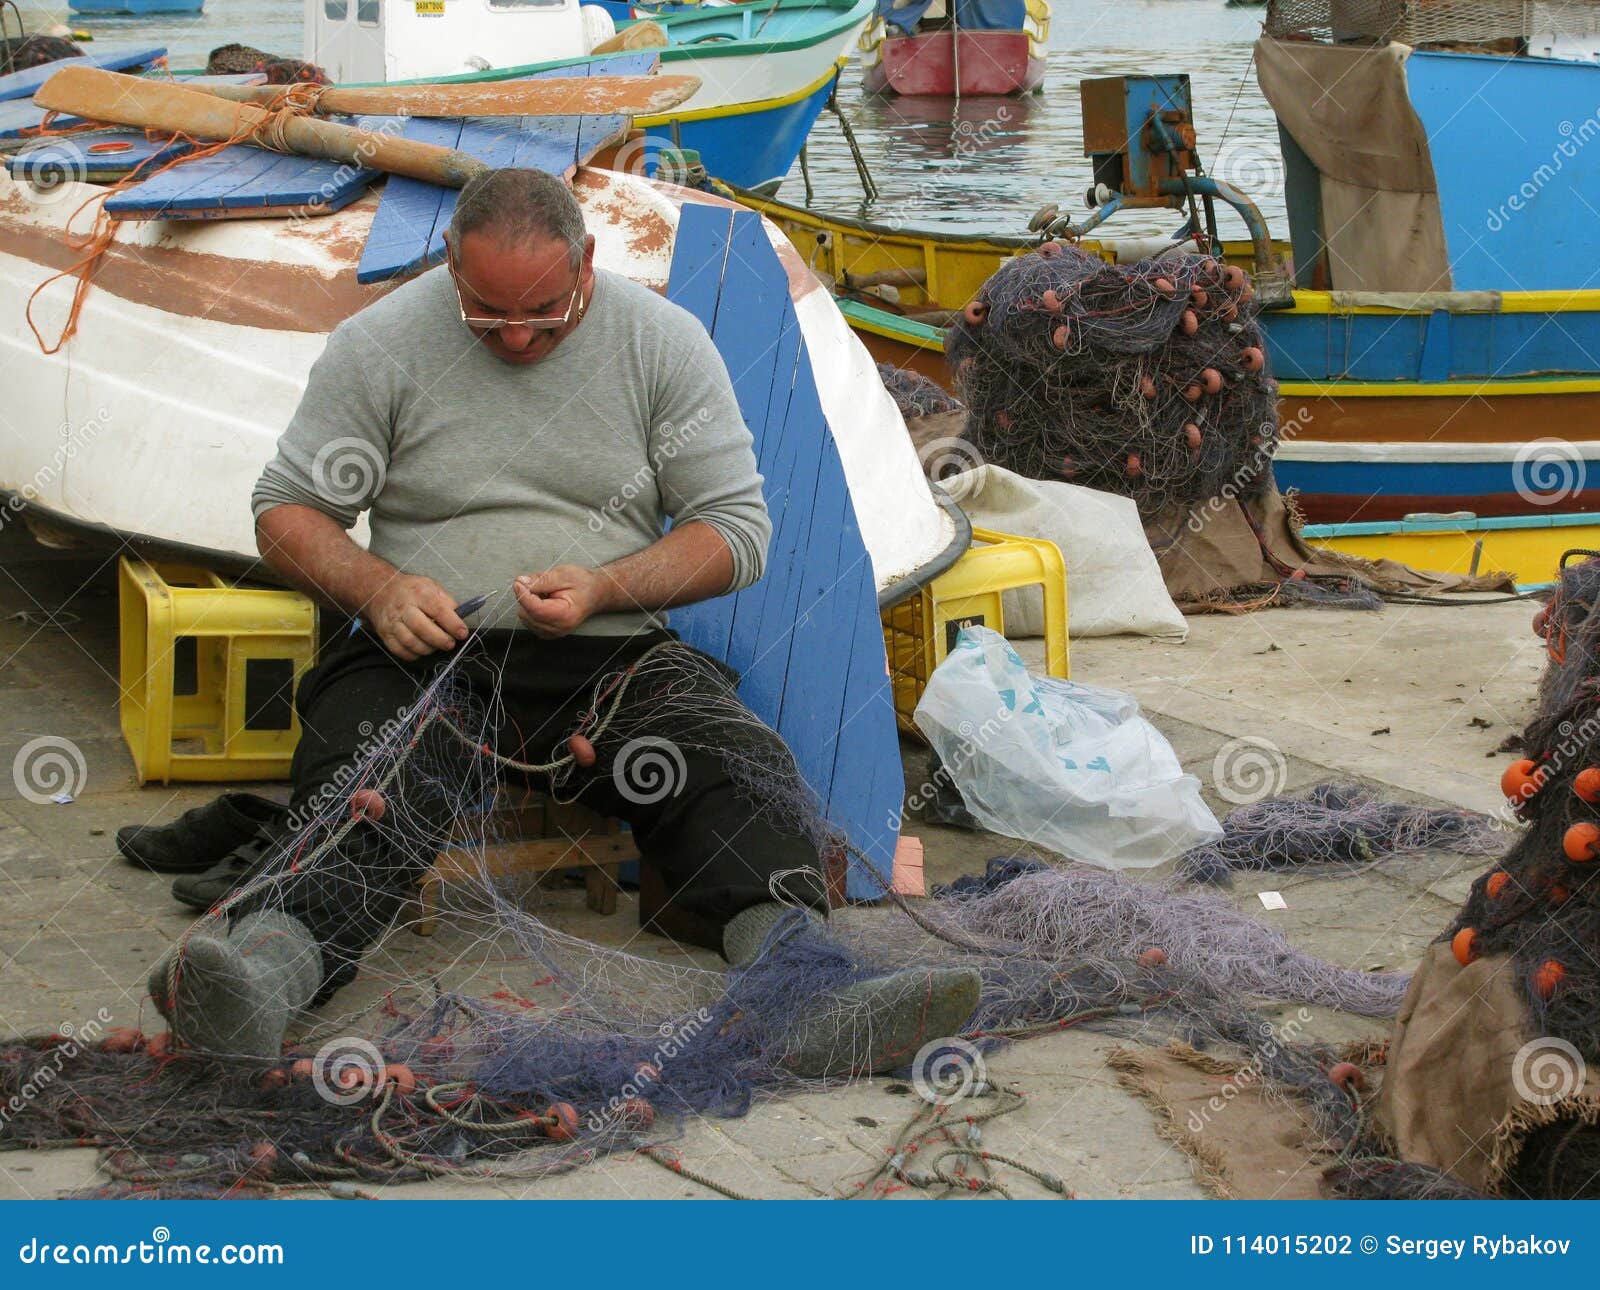 https://thumbs.dreamstime.com/z/repair-fishing-nets-port-malta-marsachlokk-worker-preparing-marsaxlokk-around-traditional-colorful-boats-114015202.jpg